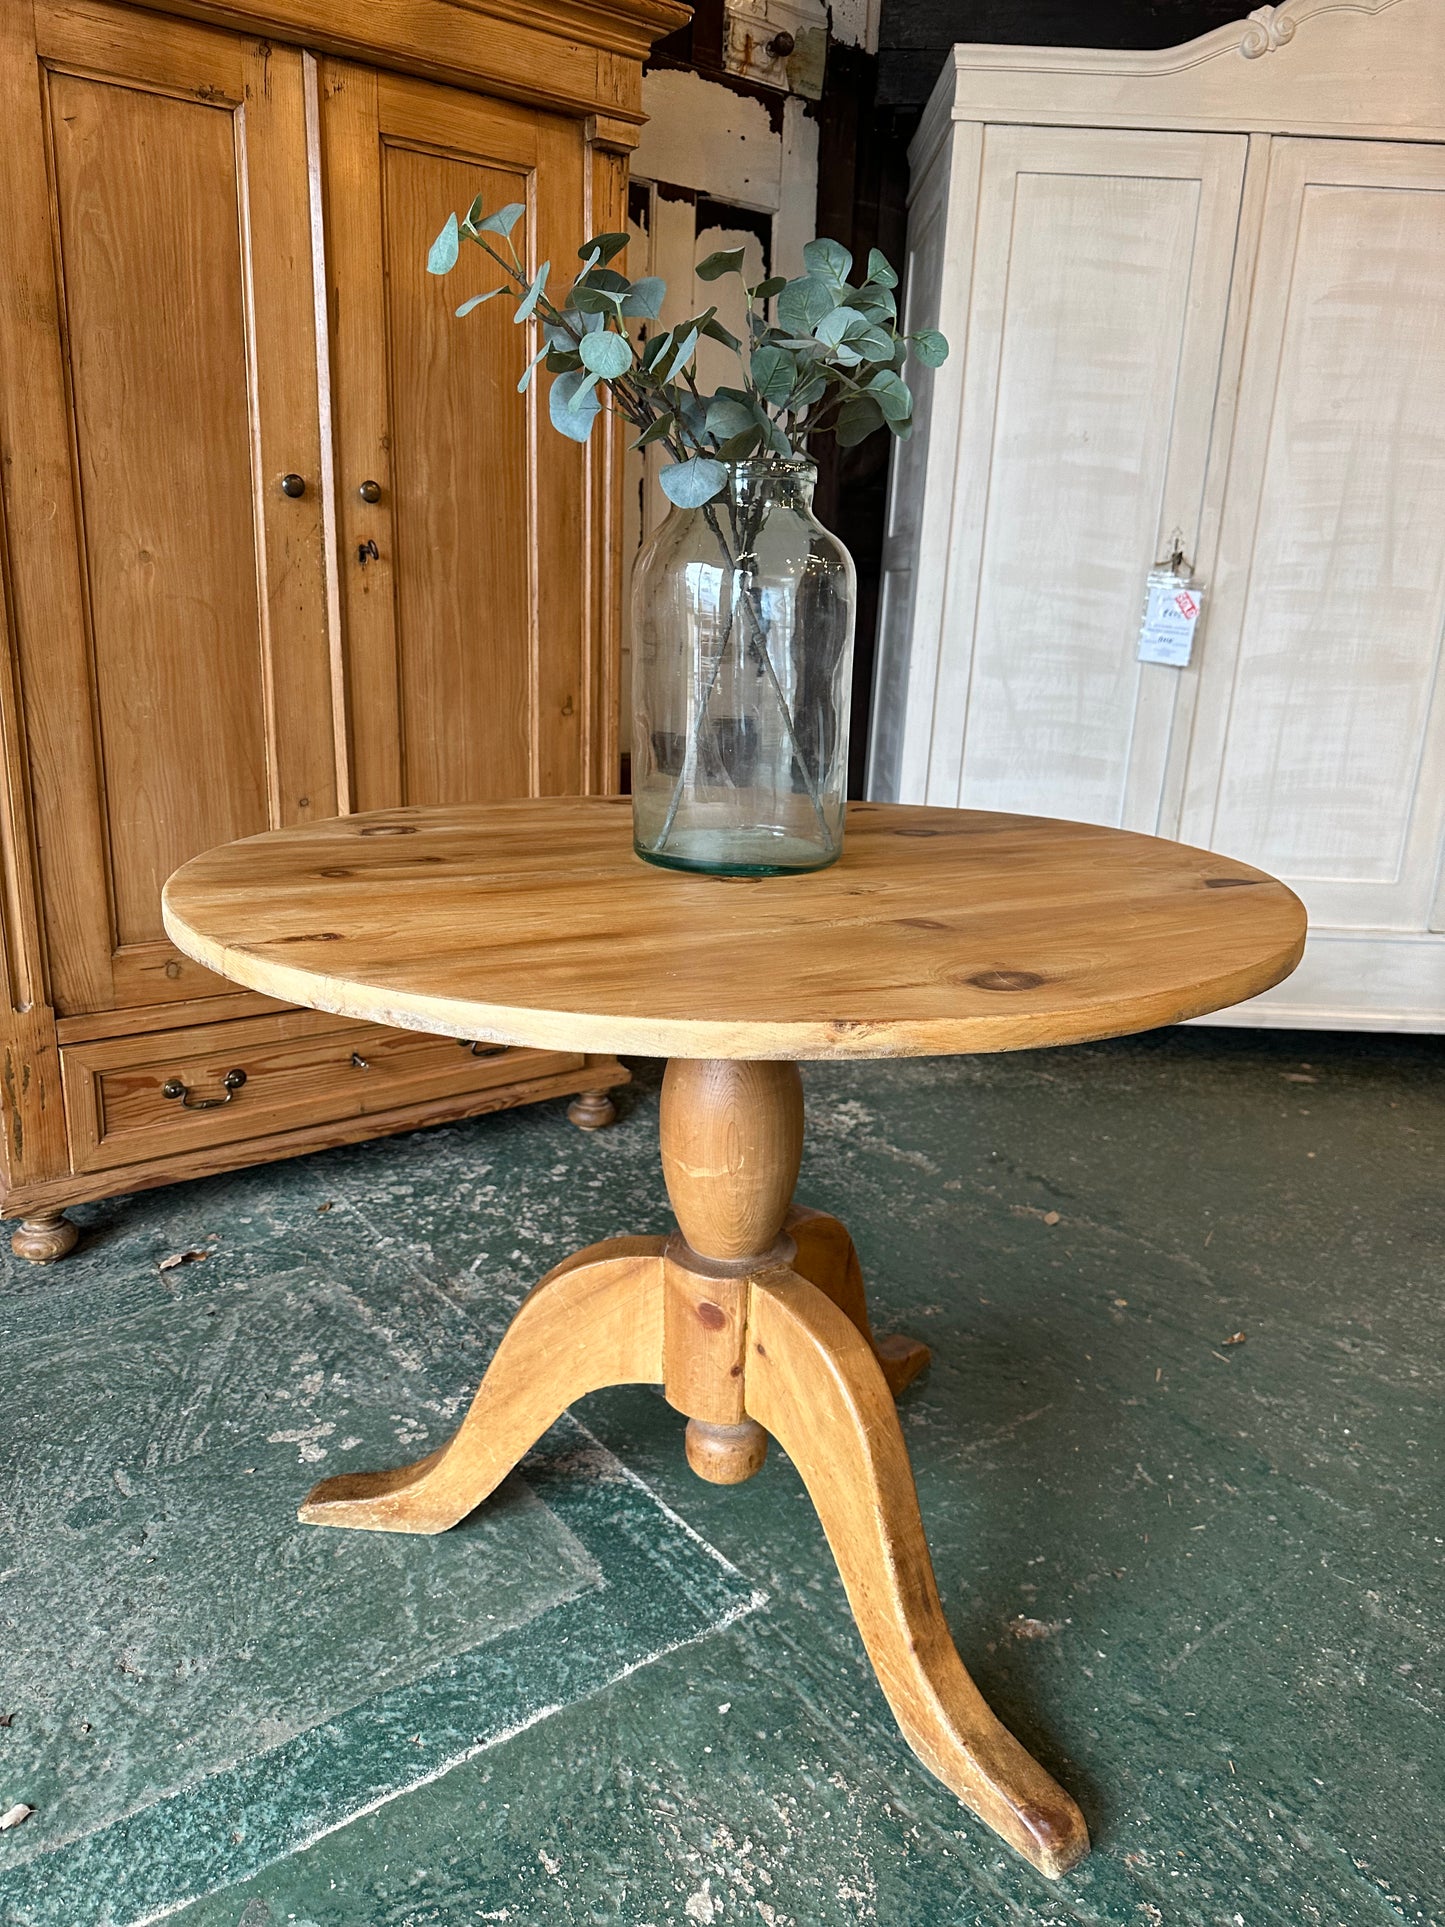 Rustic pedestal table